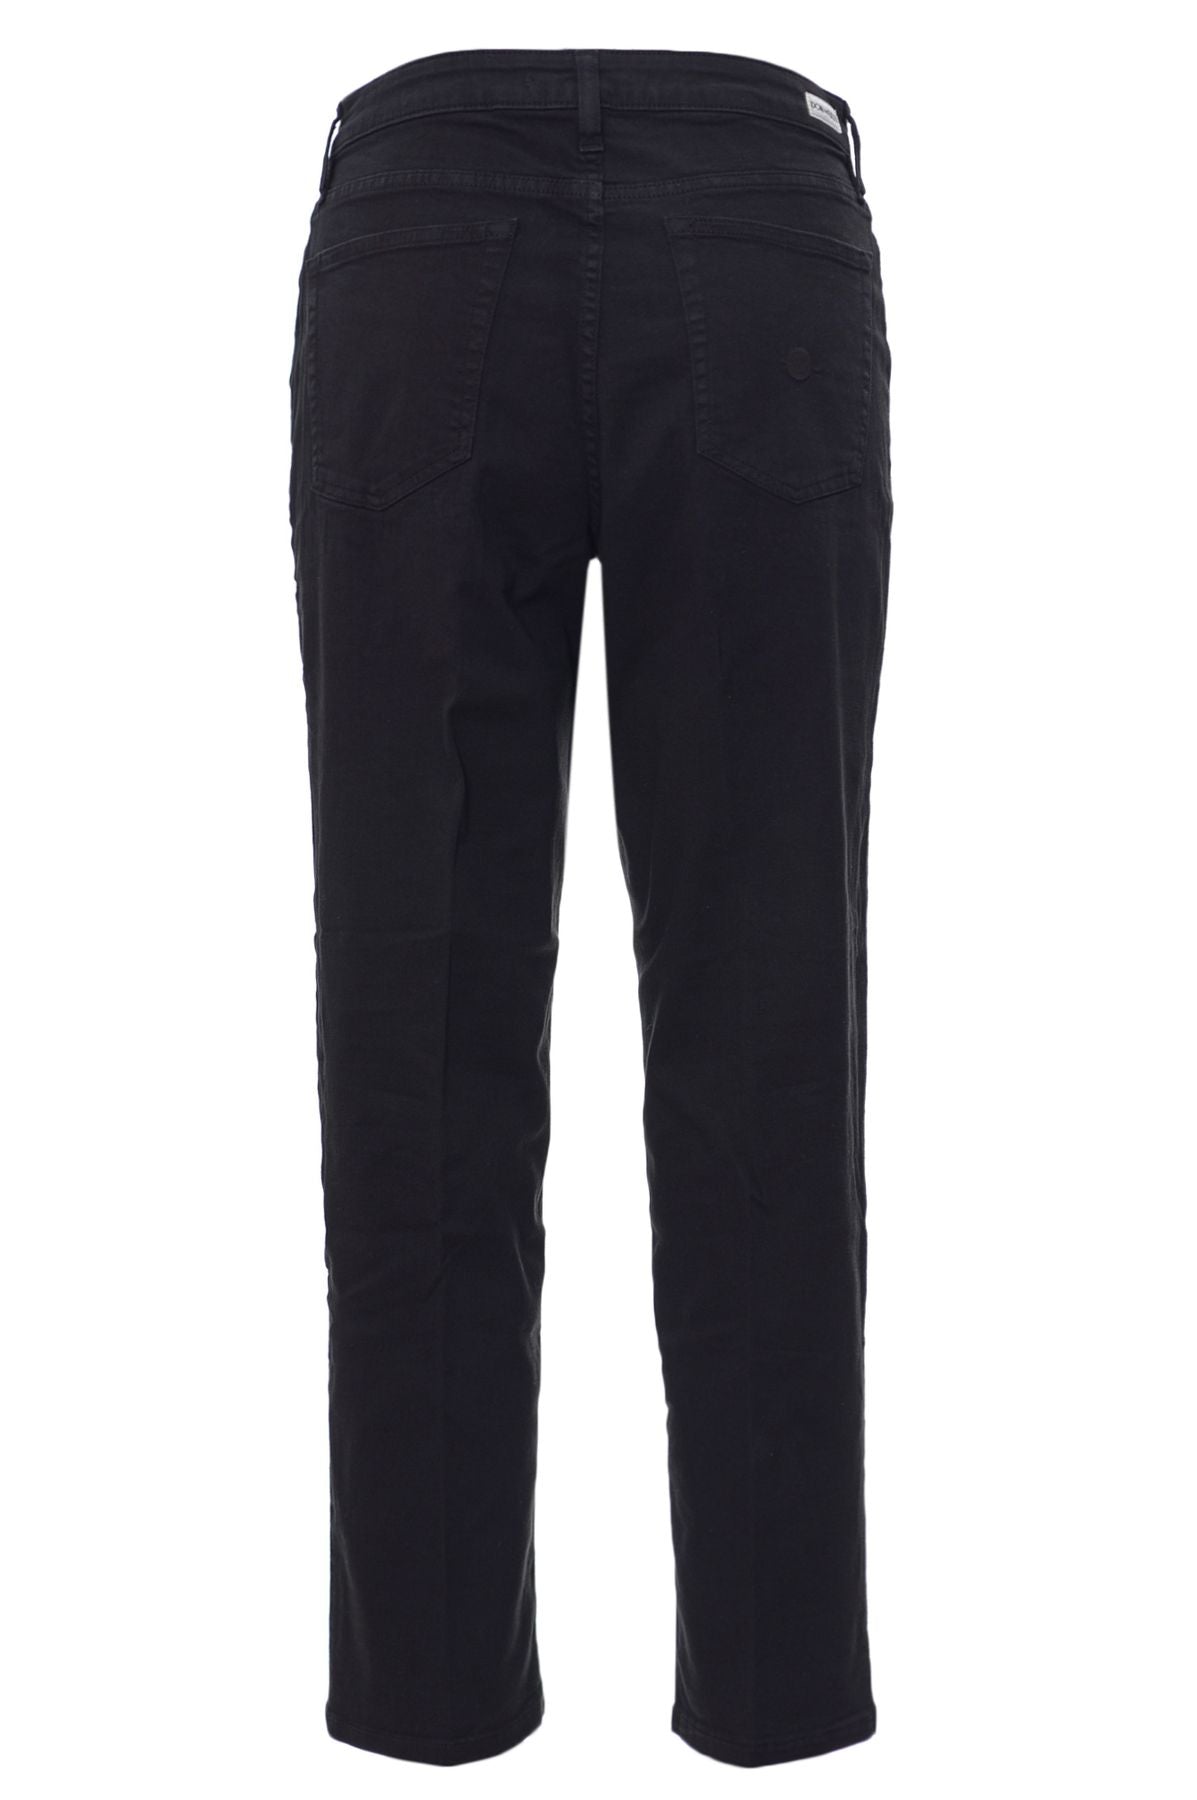 DONTHEFULLER Jeans Primavera/Estate Cotone